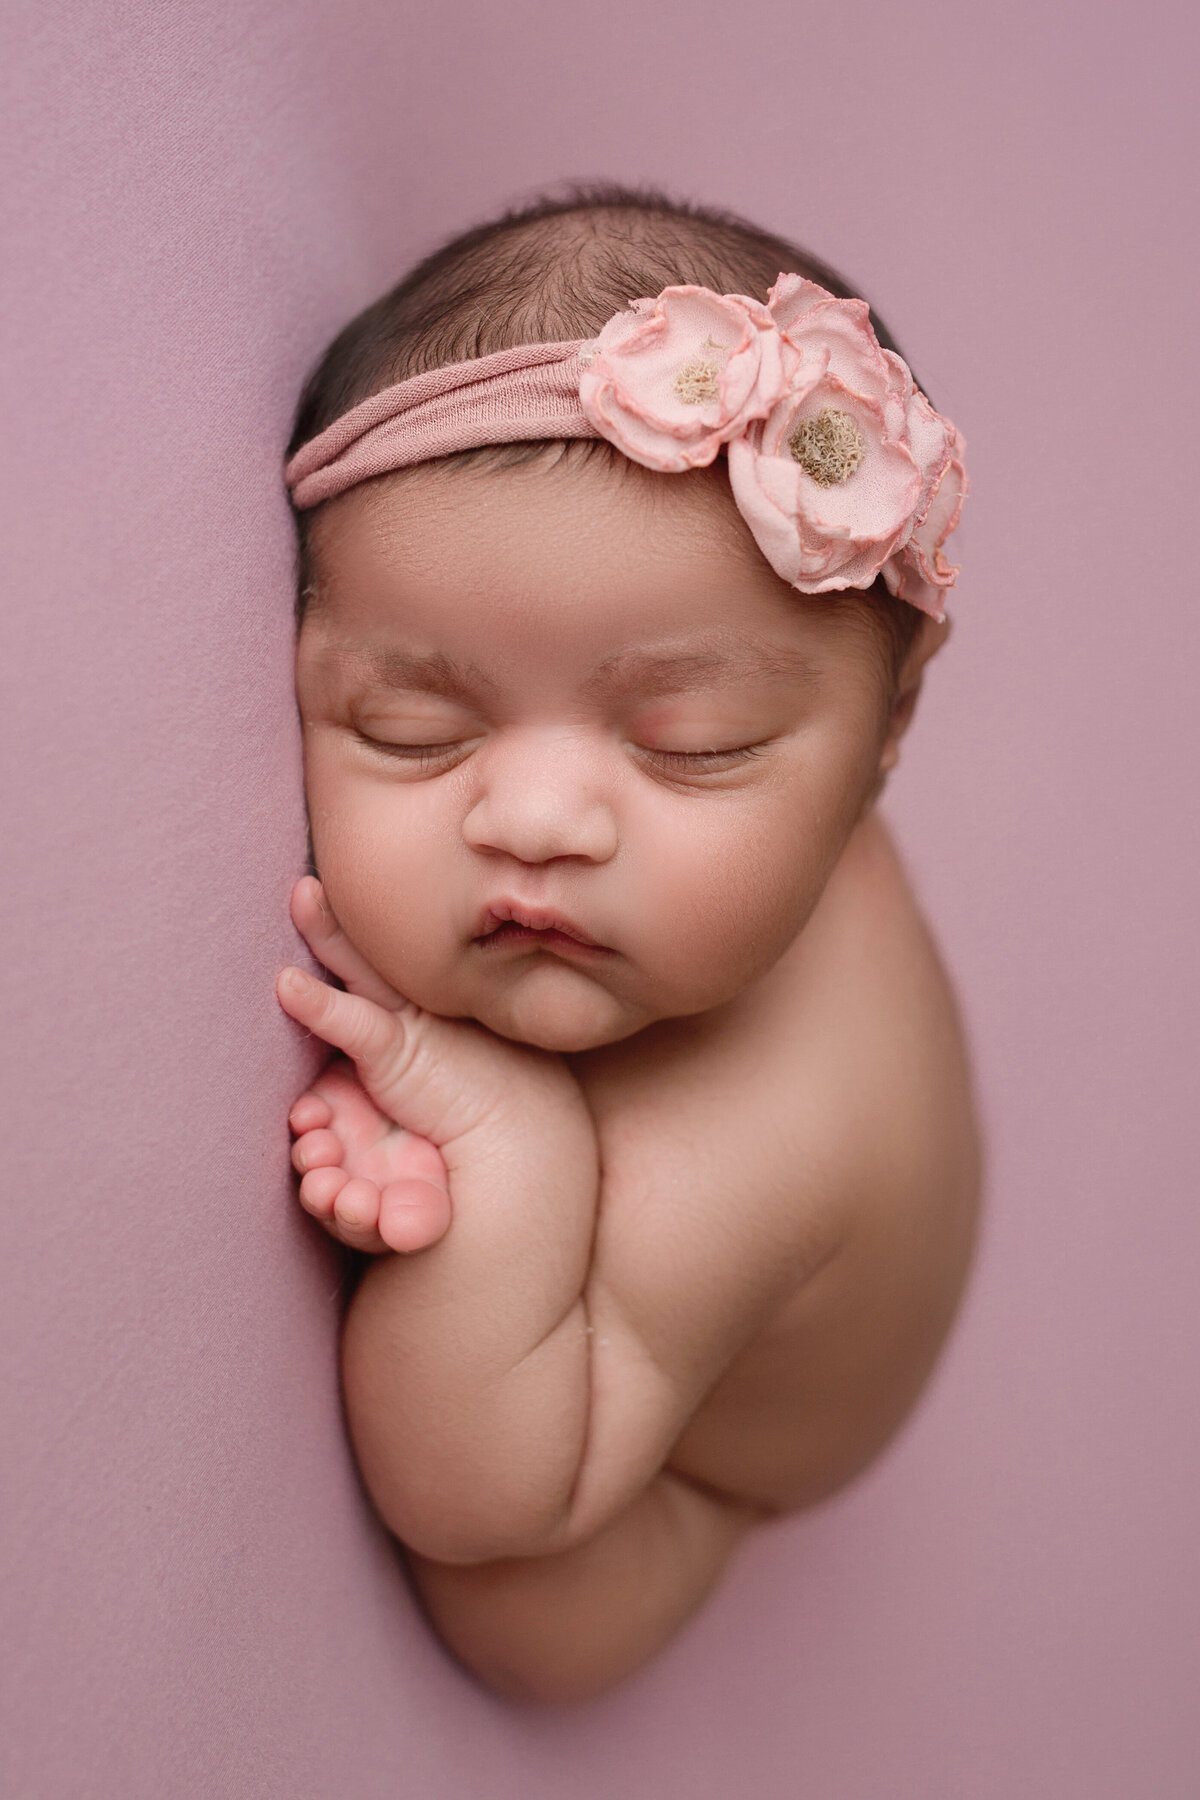 snuggled baby girl sleeping on a pink blanket